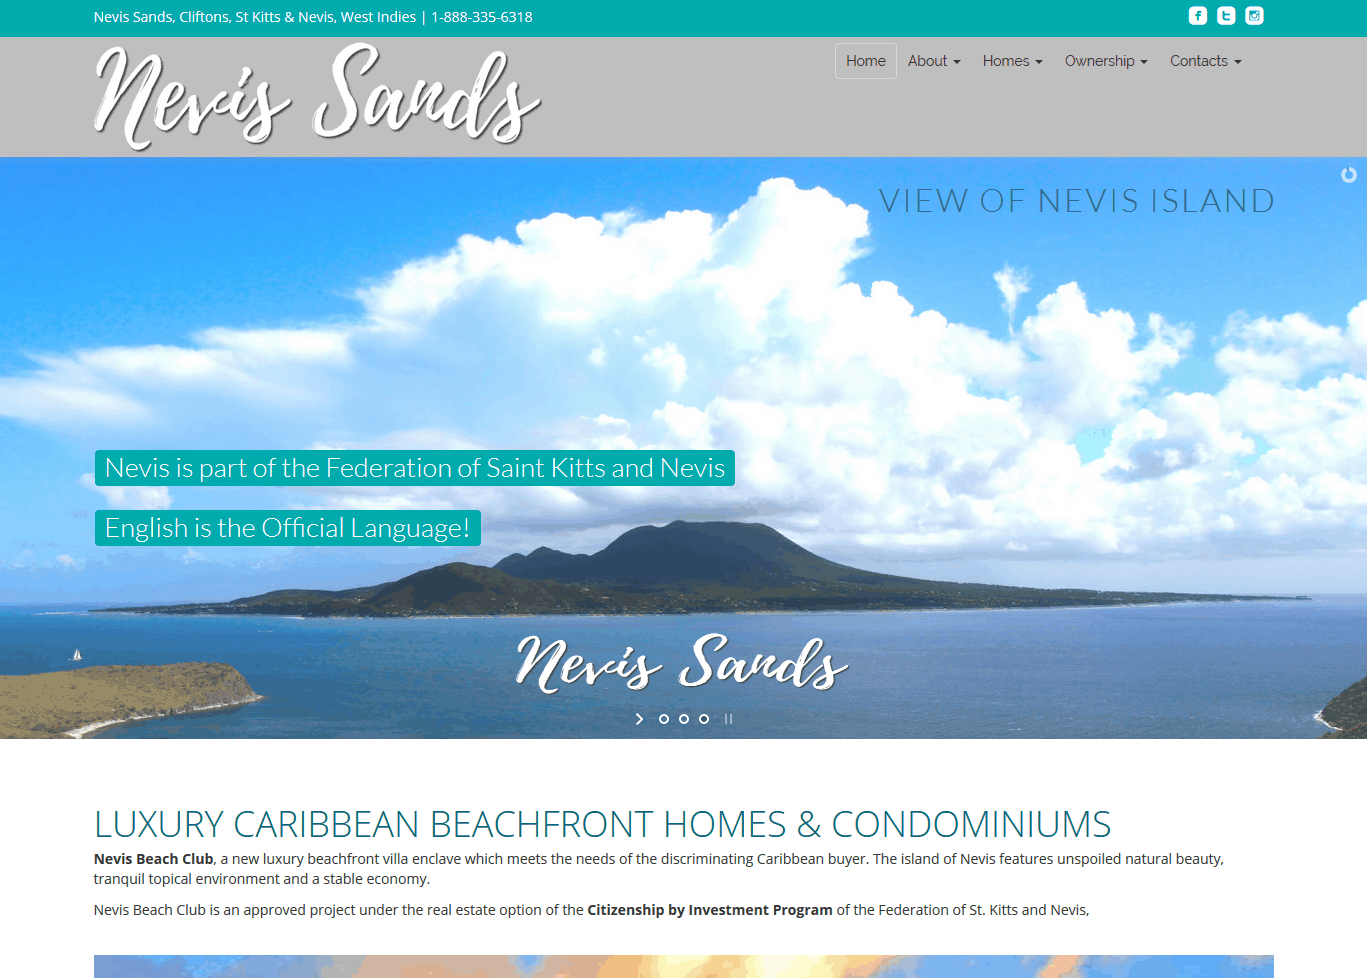 Nevis Sands Website by iSatisfy.com Miami Web Design